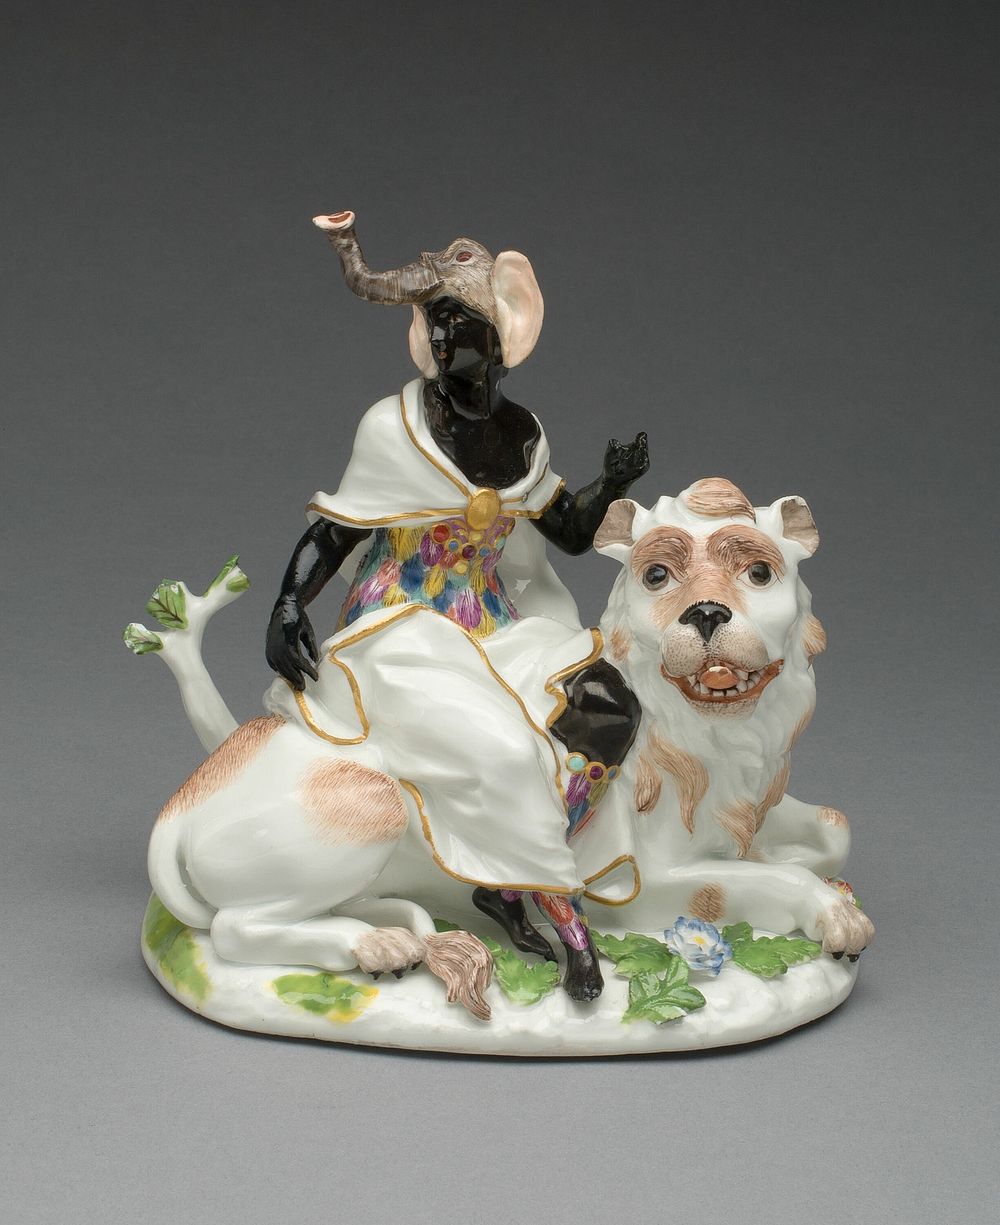 Allegorical Figure Representing Africa by Meissen Porcelain Manufactory (Manufacturer)